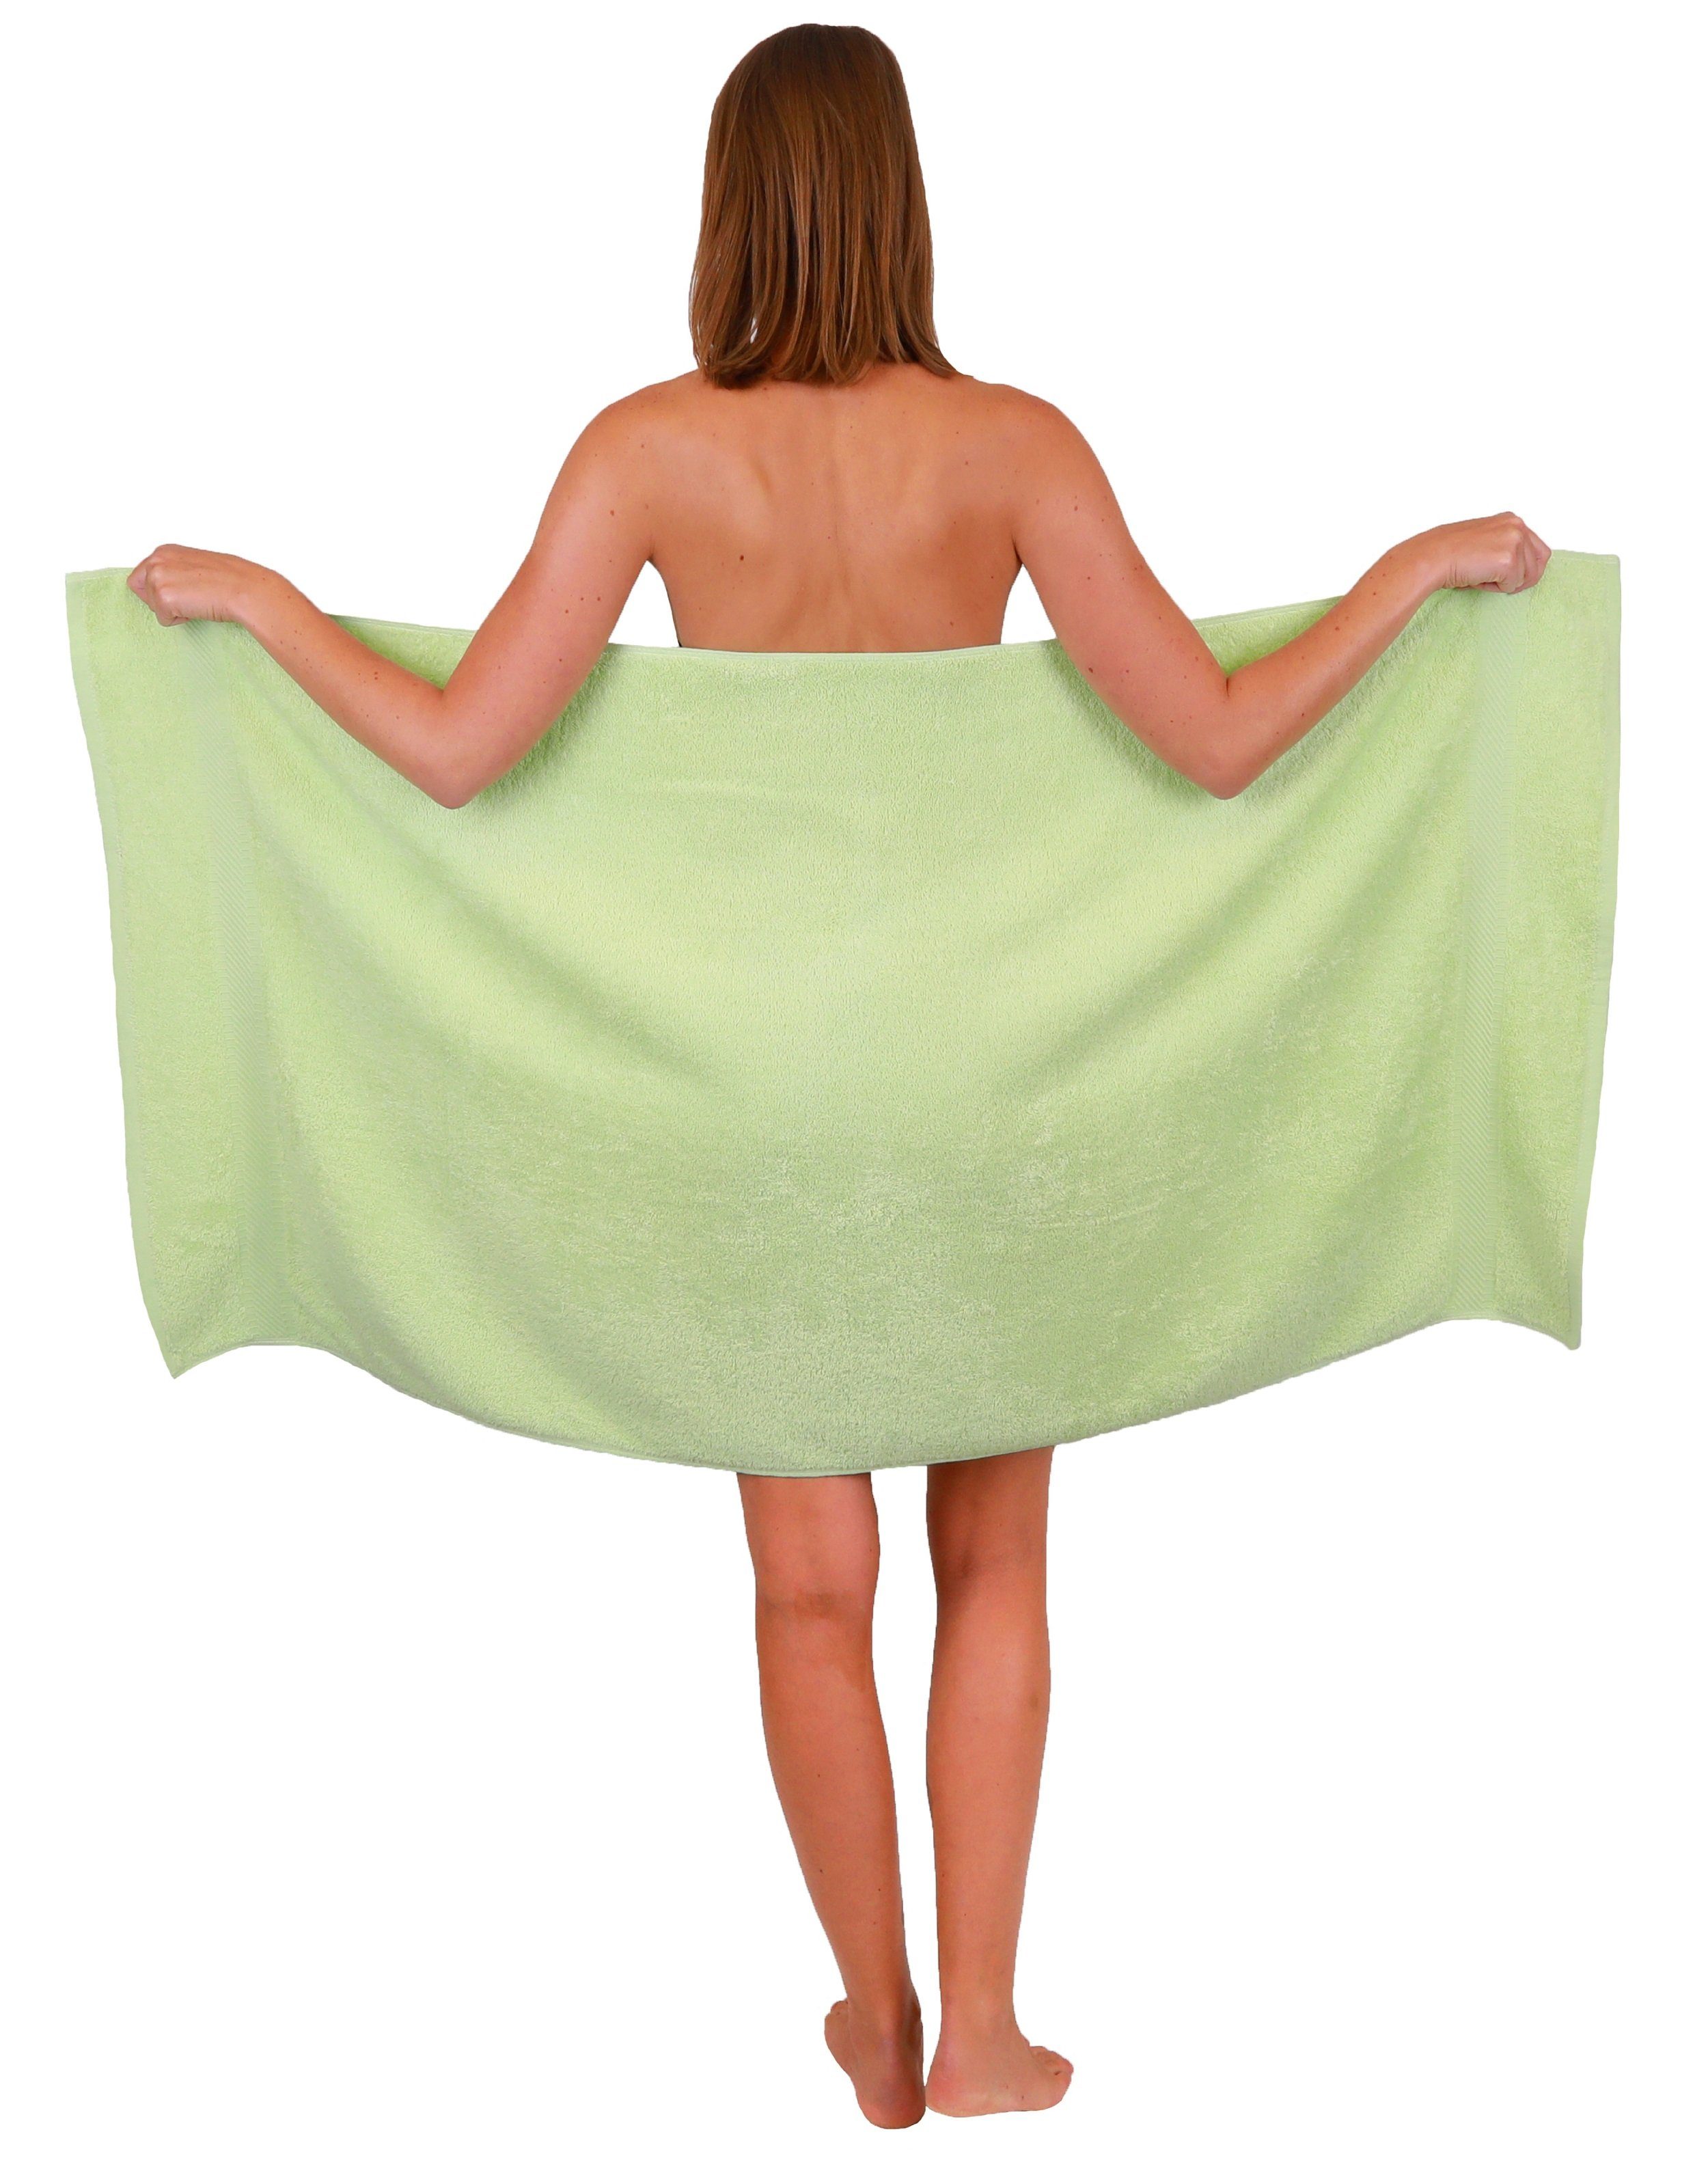 Stück Duschtücher Farbe Duschtücher Duschtuch-Set weiß Baumwolle Baumwolle Betz 4 100% grün, Palermo 100% und